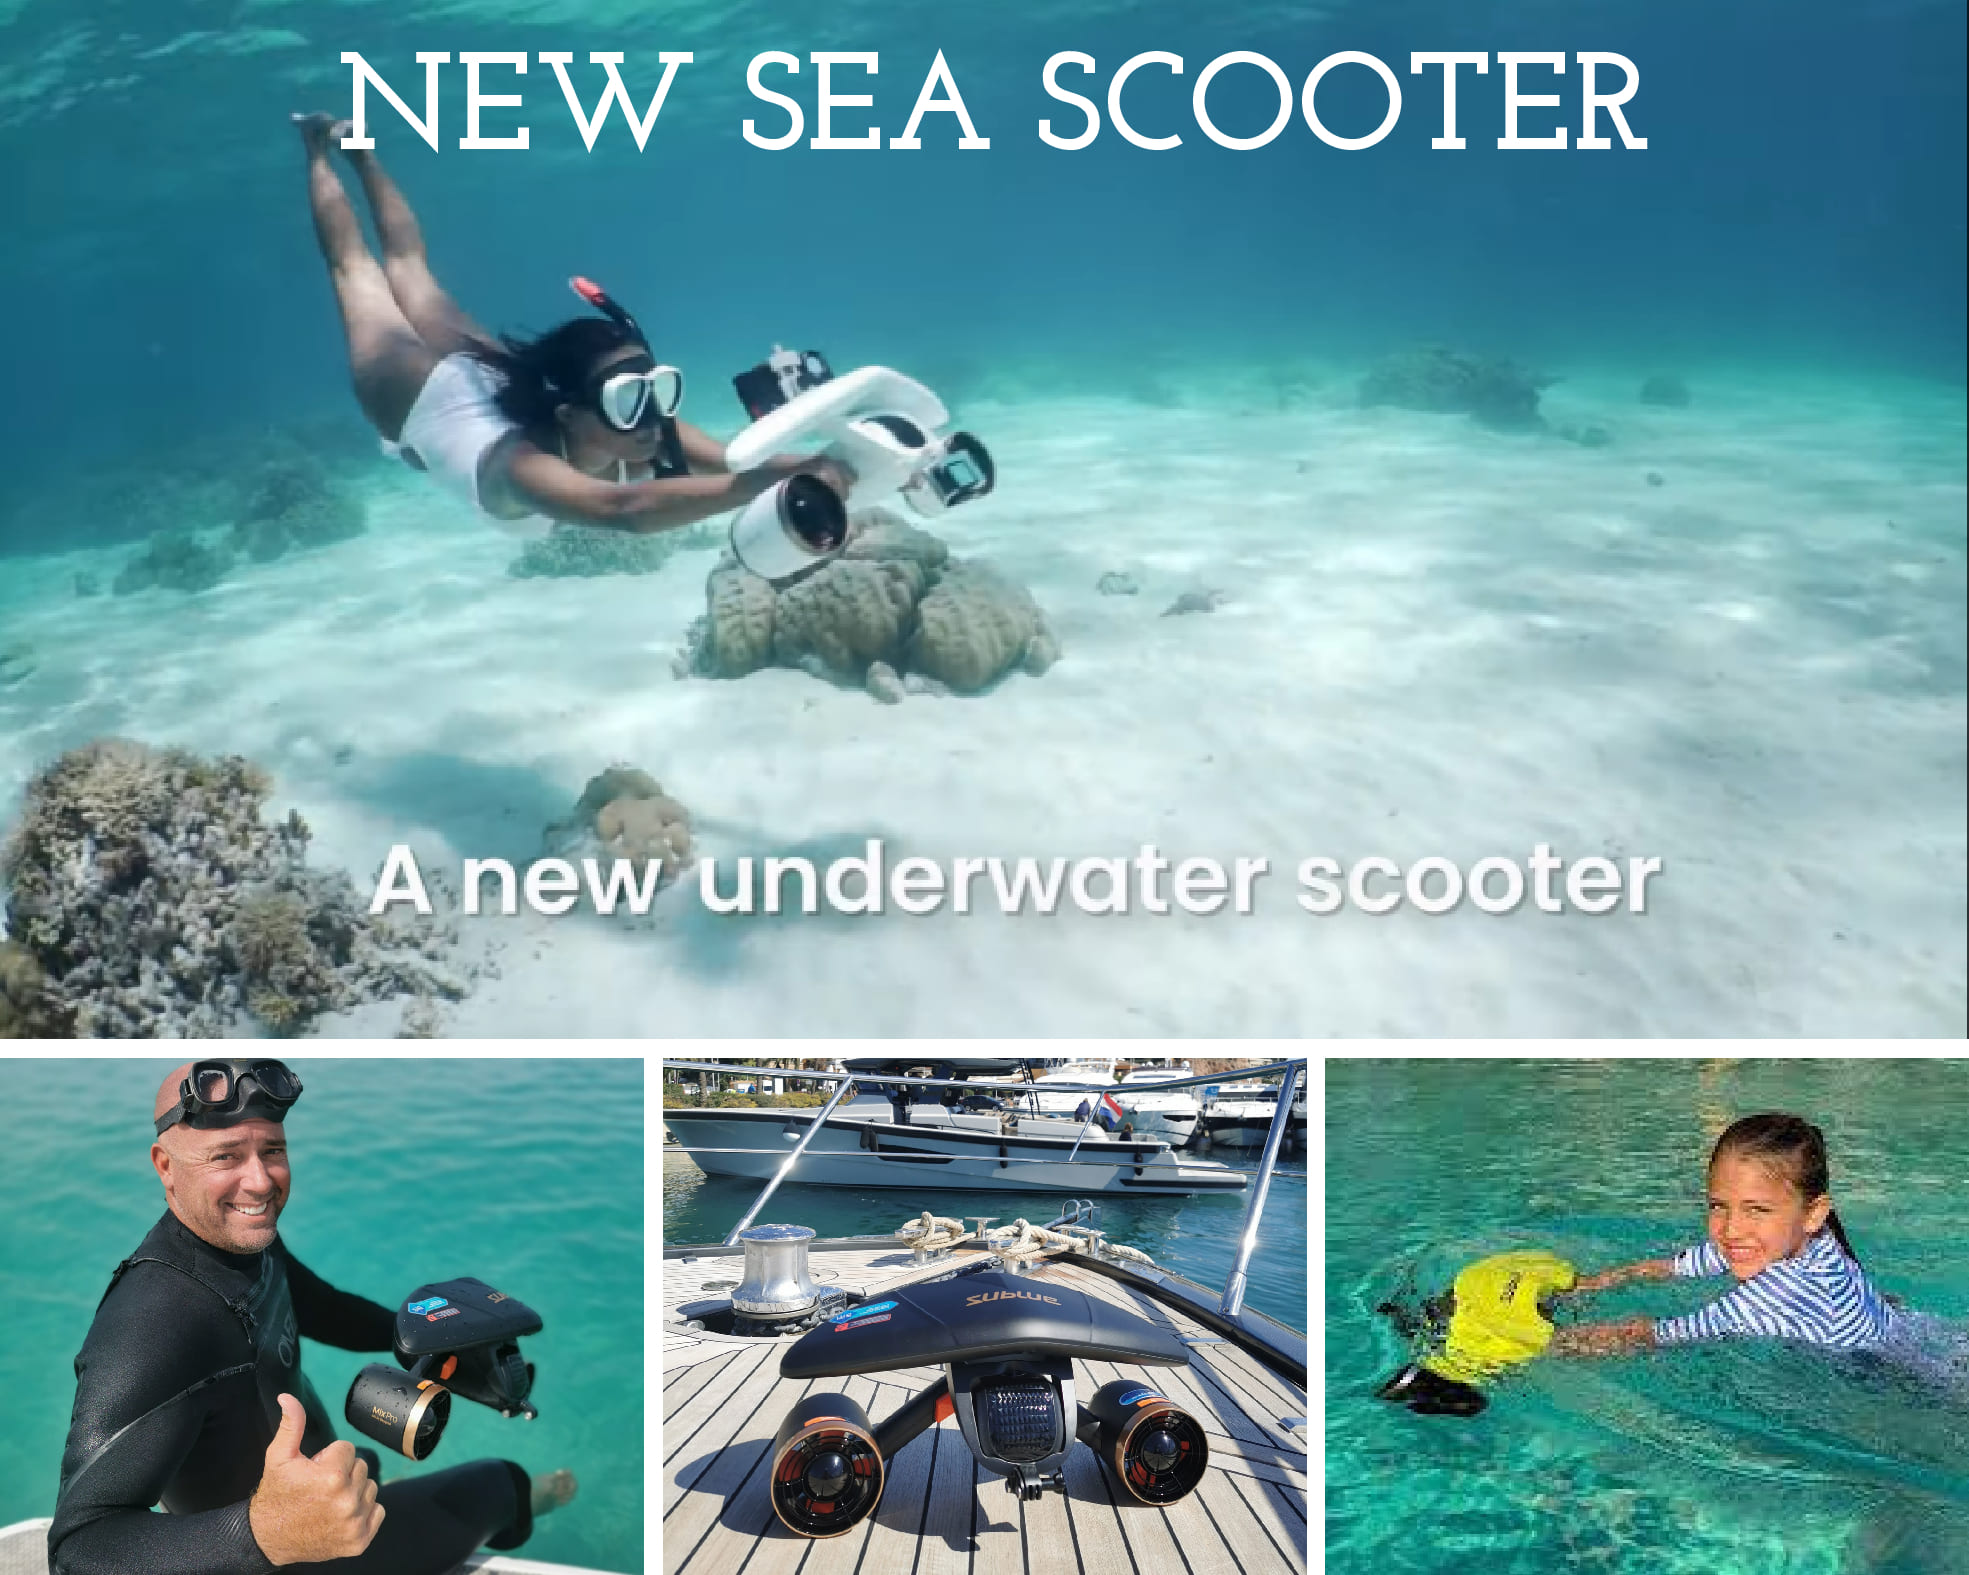 Sea Scooter o Propulsor Acuatico 